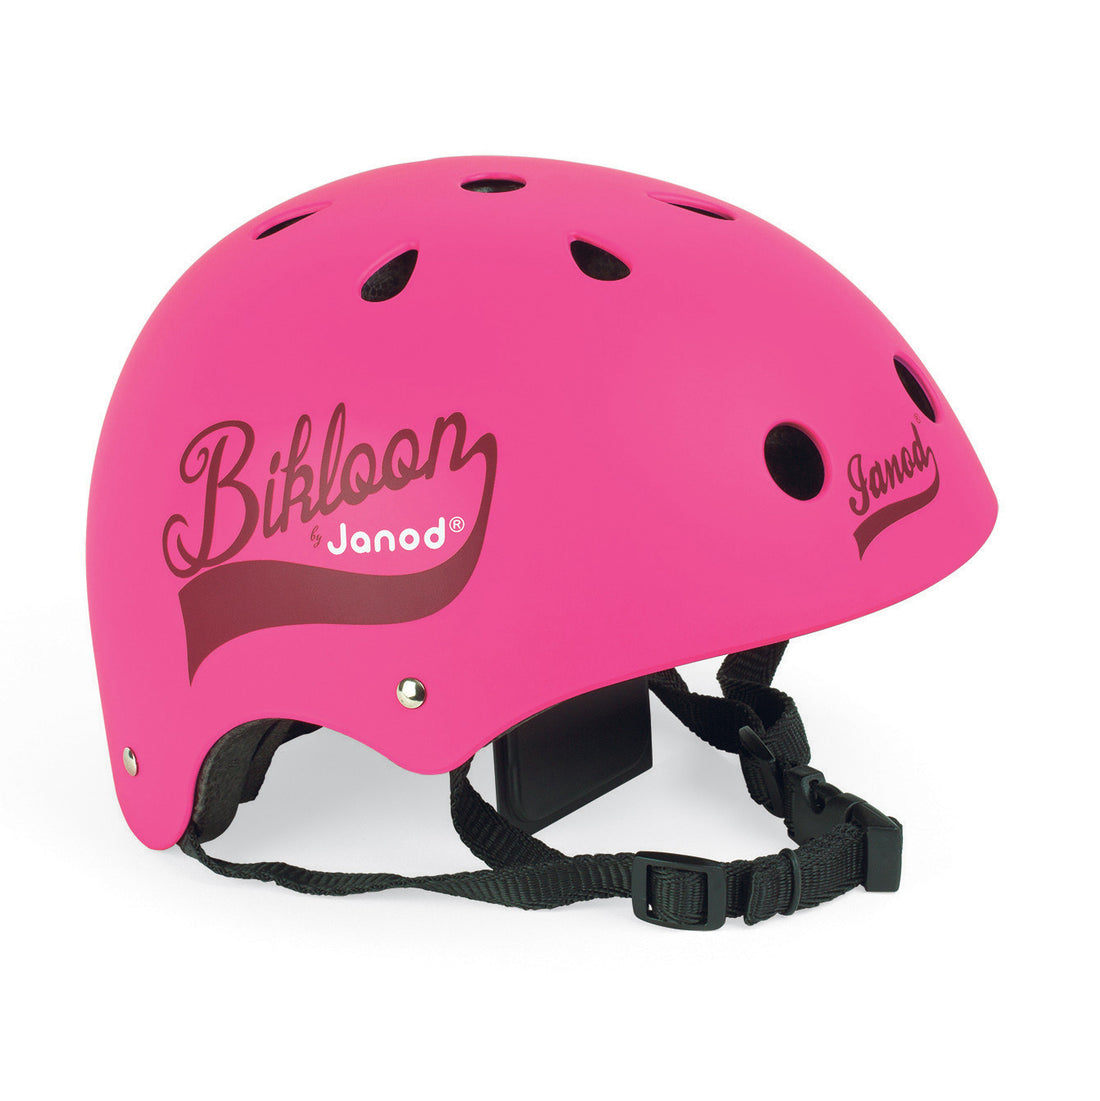 janod-helmet-for-balance-bike-pink-01